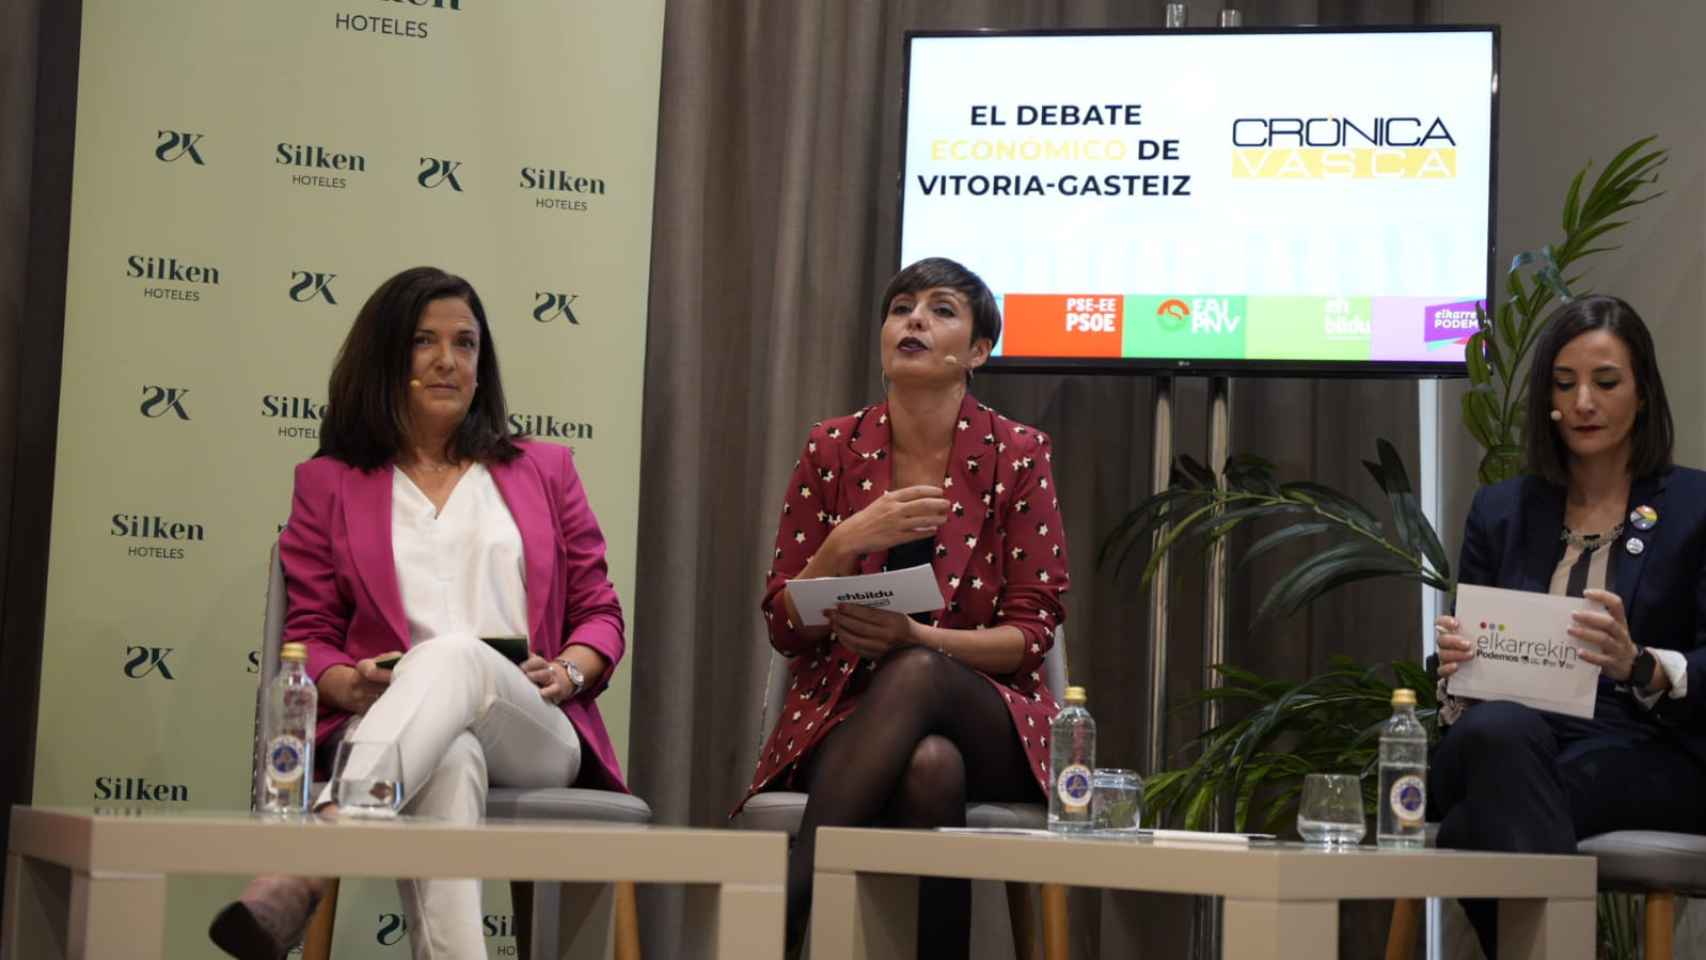 Debate Económica de Vitoria-Gasteiz